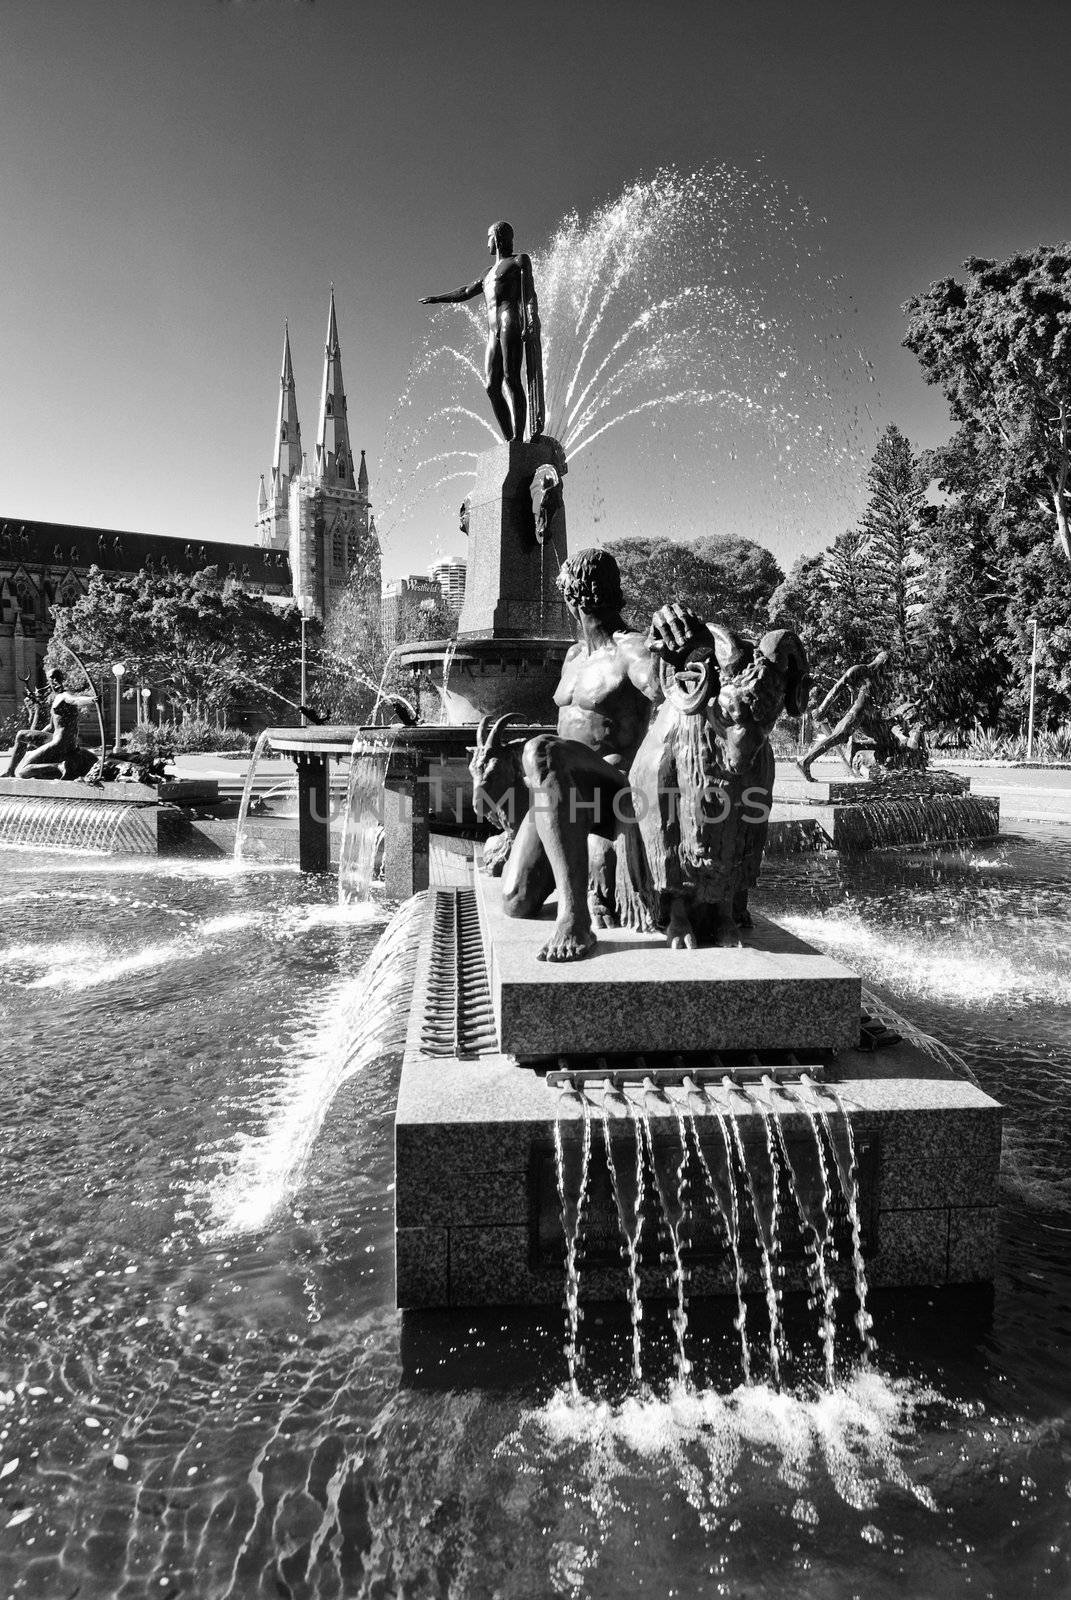 Wide Shot of Archibald Fountain in Sydney, Australia